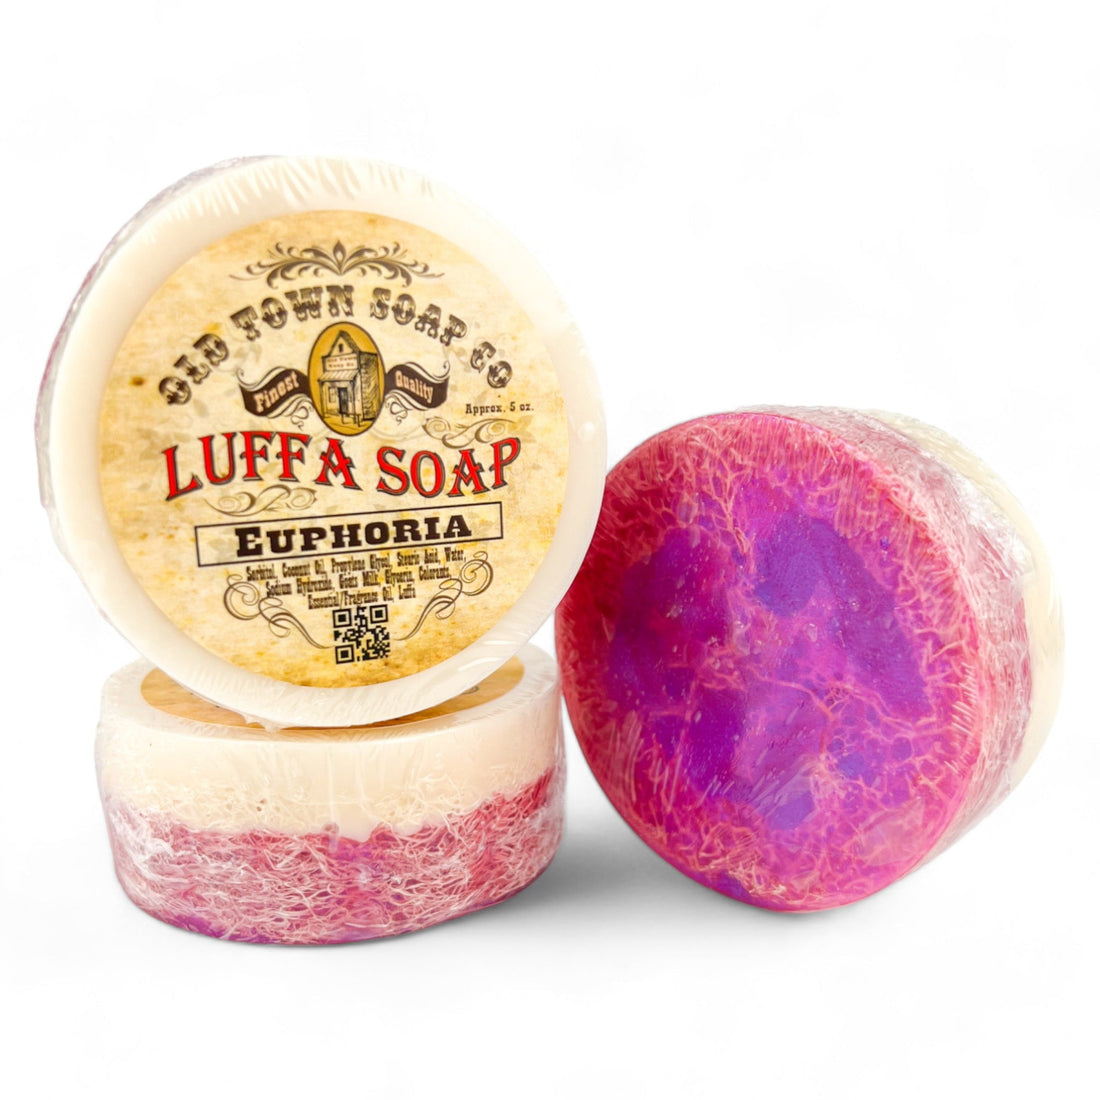 Euphoria -Luffa Soap - Old Town Soap Co.